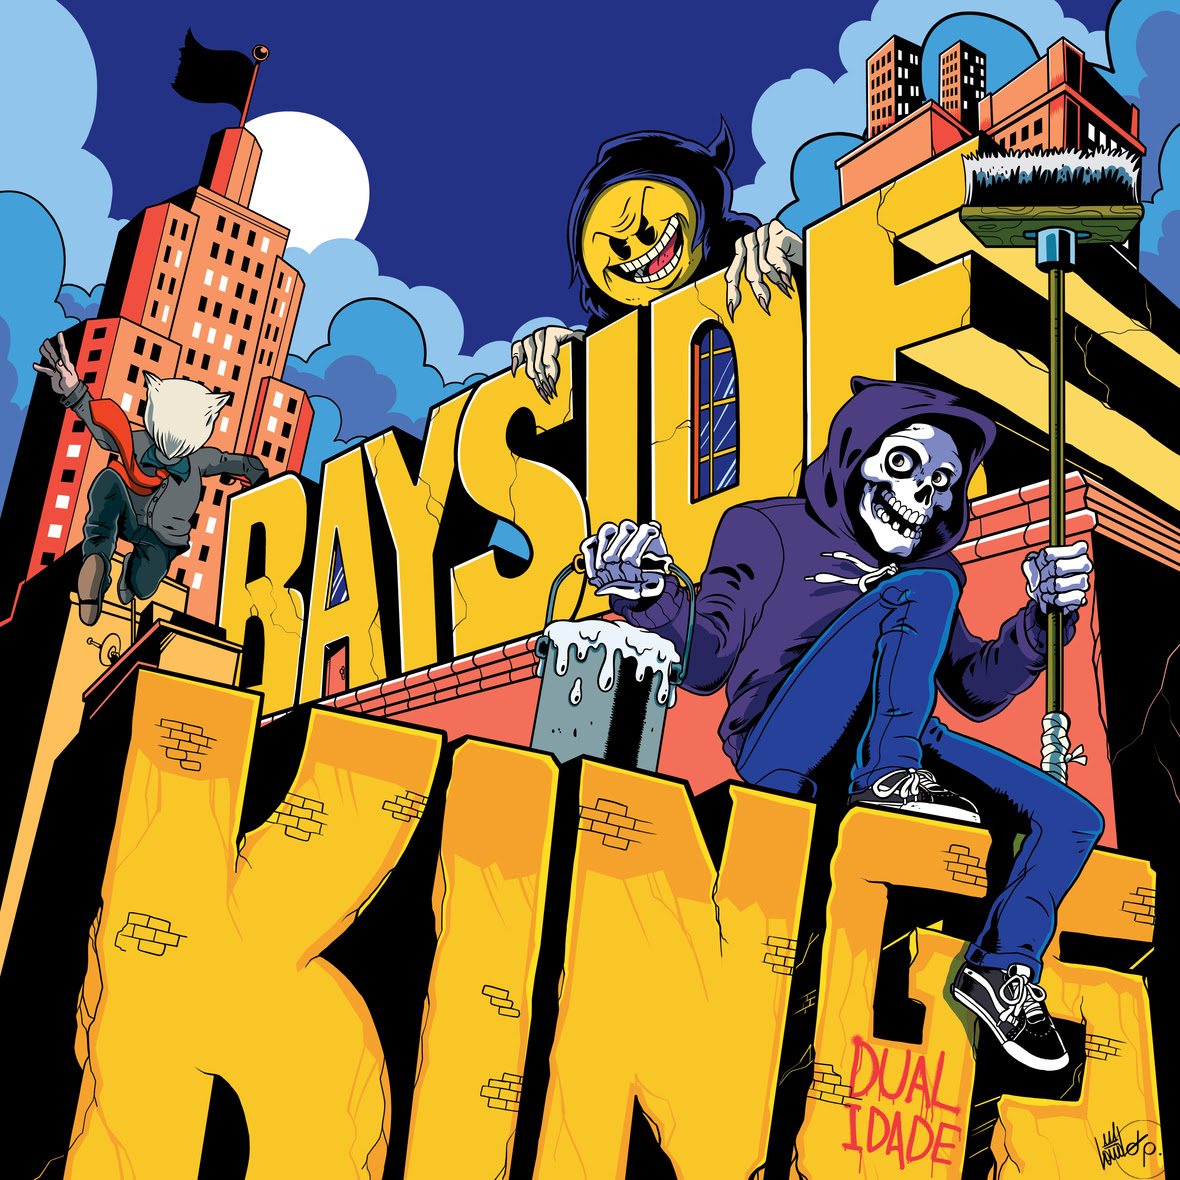 Bayside Kings - Dualidade #LivreParaTodos